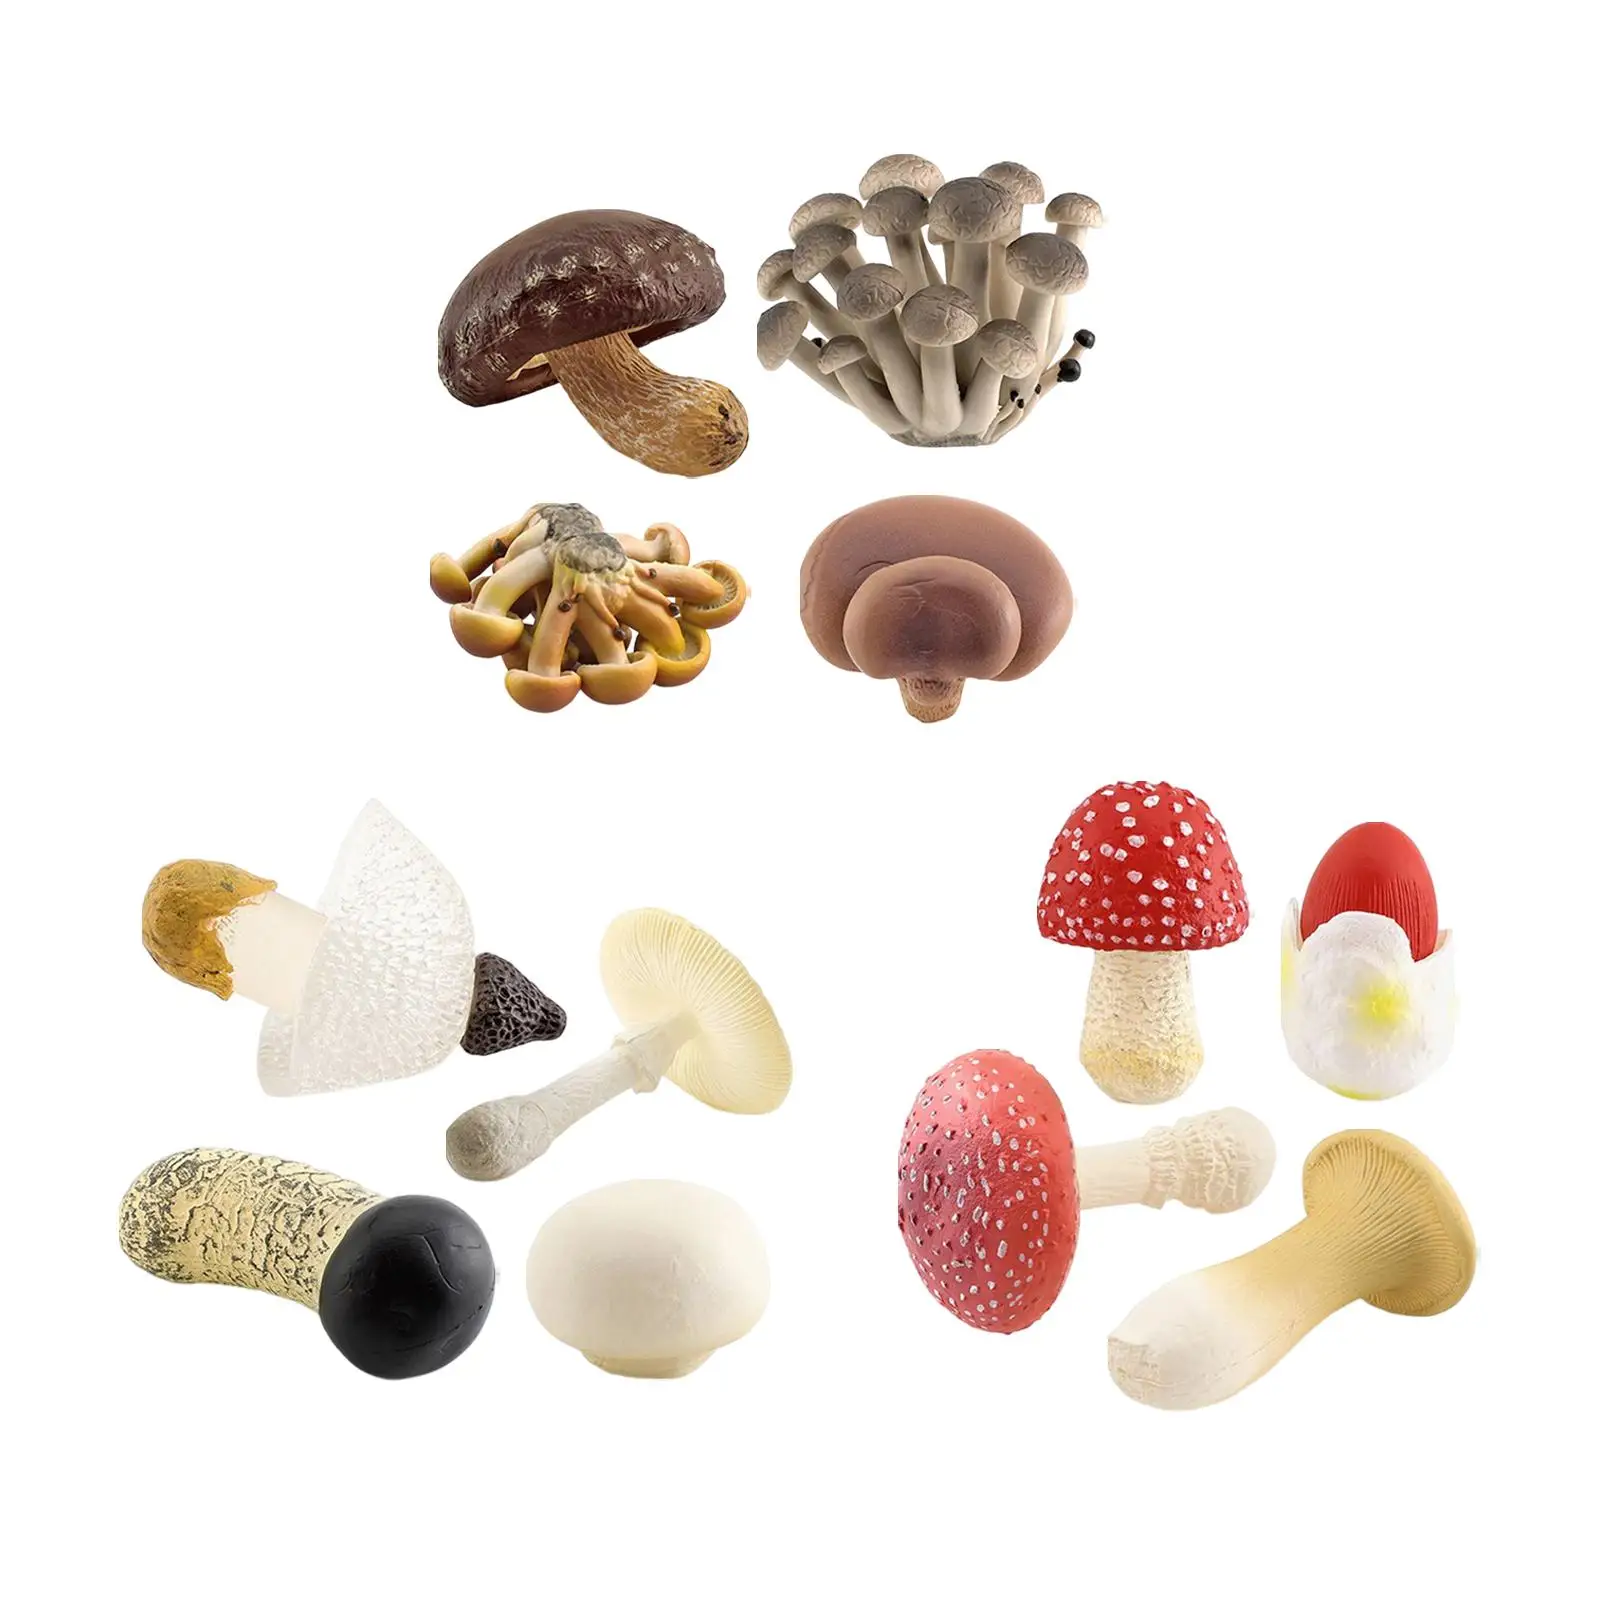 4Pcs Miniature Mushroom Model Decorations for Micro Landscape Scene Layouts